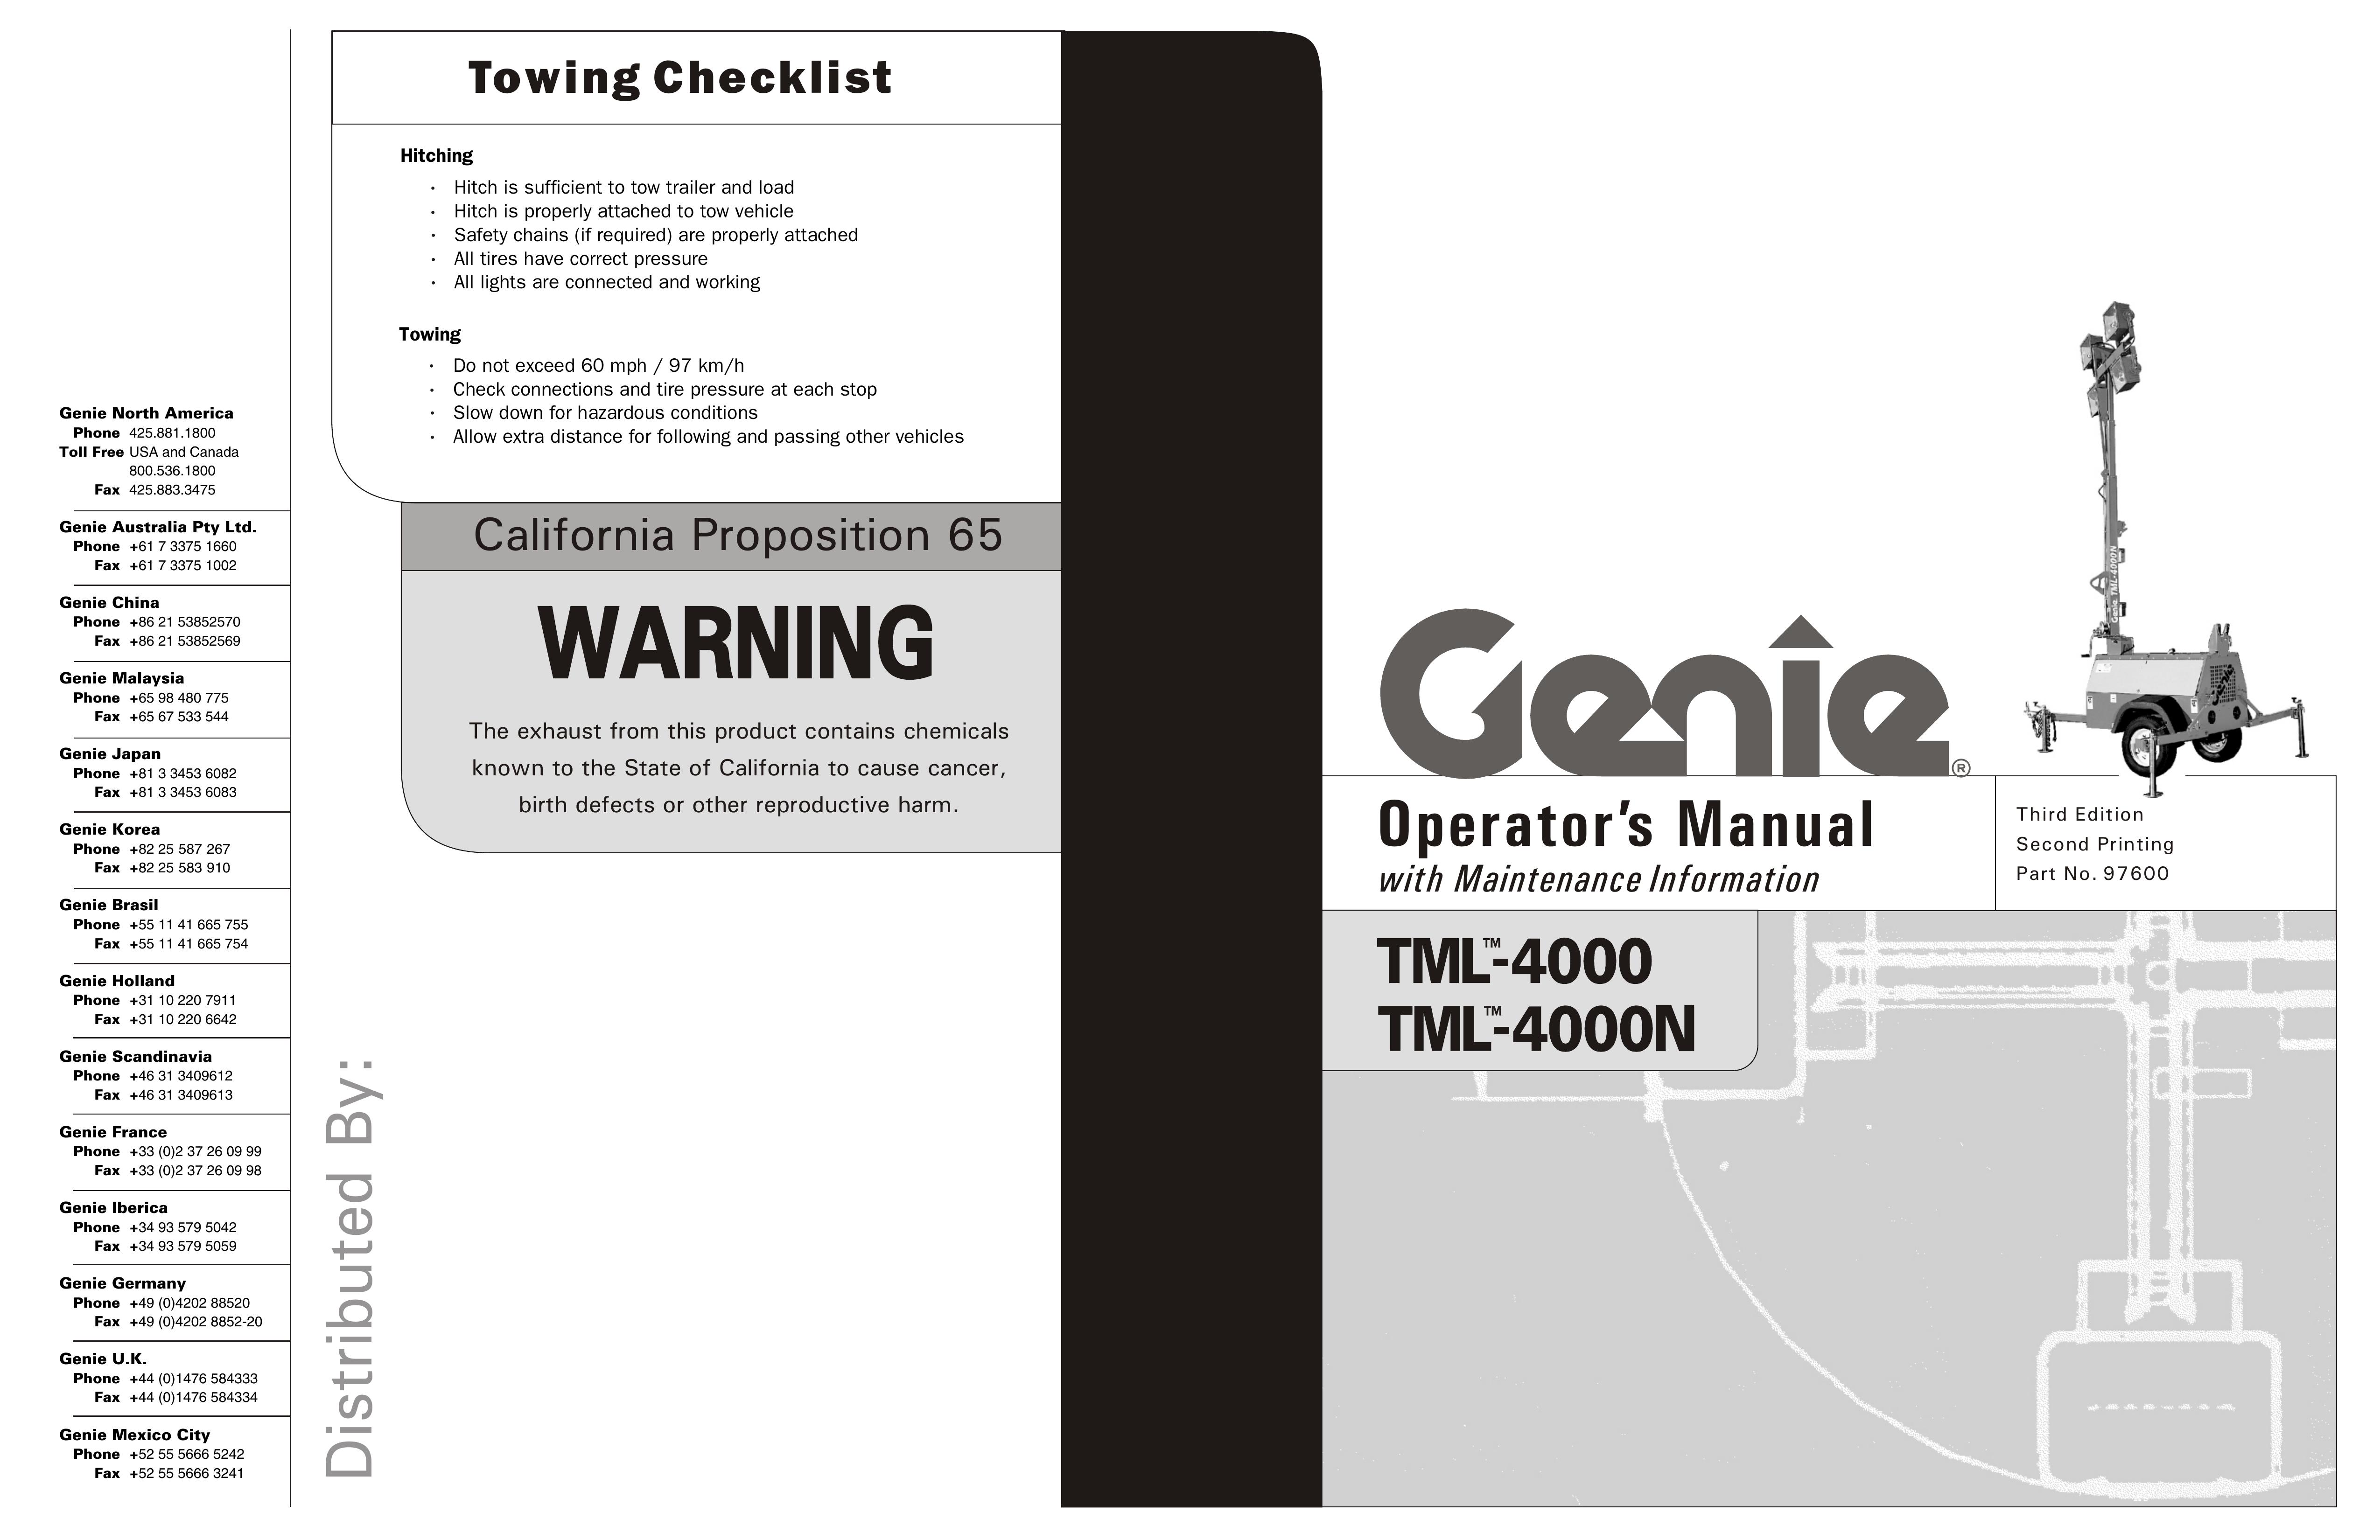 Genie TML-4000 Portable Generator User Manual